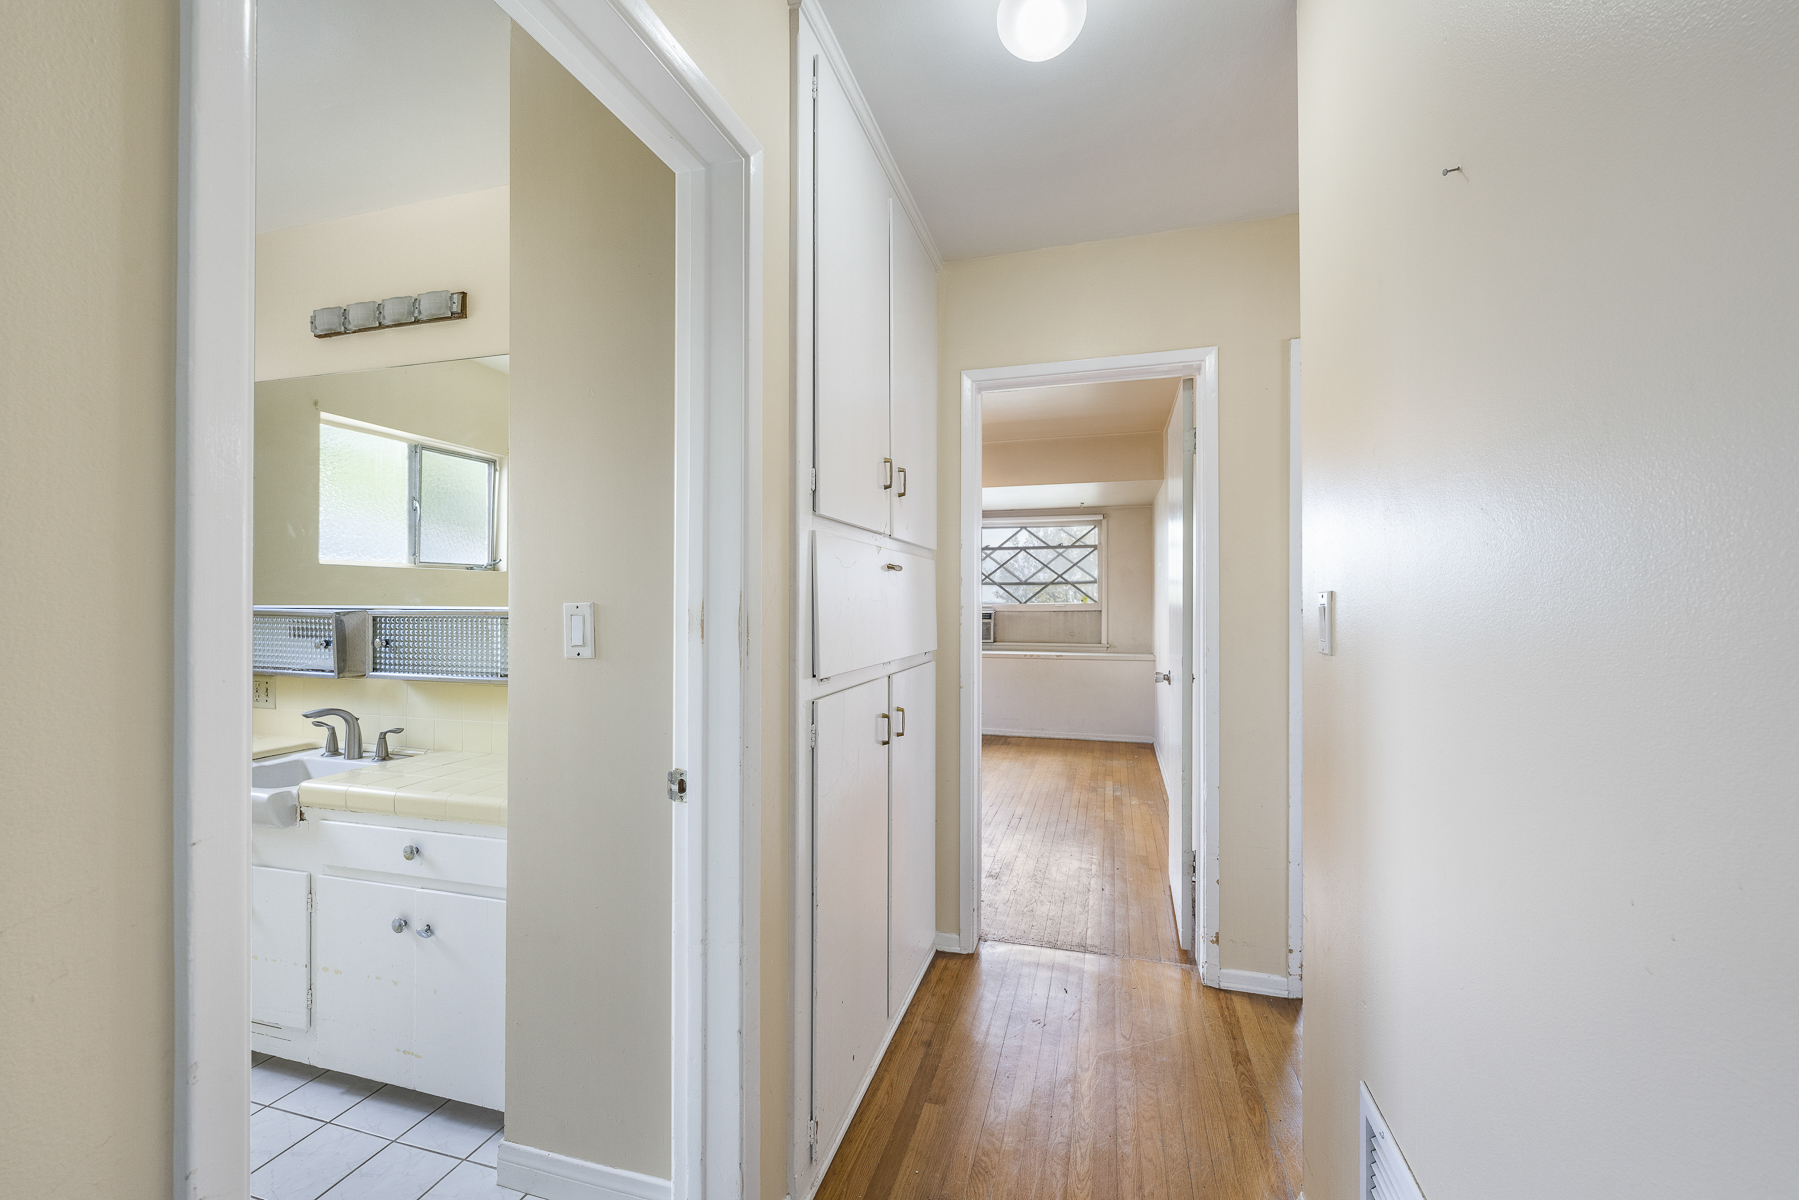 501 Dorothy Drive: Hallway view of bathroom and bedroom